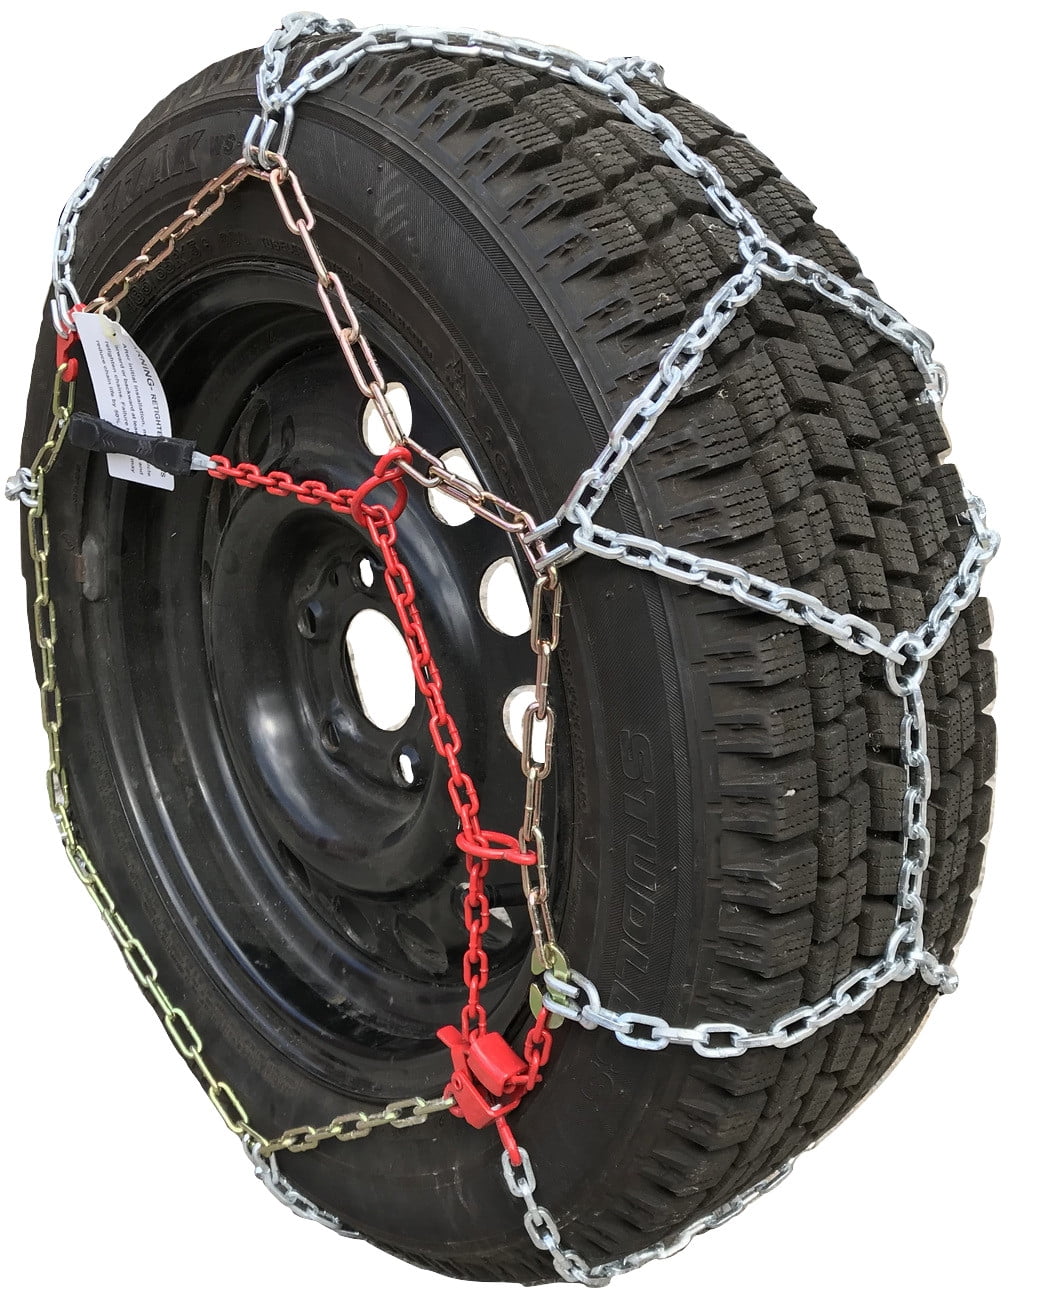 33X12.5-18 TUV Diamond Tire Chains Set of 2 TireChain.com 33X12.5-18 